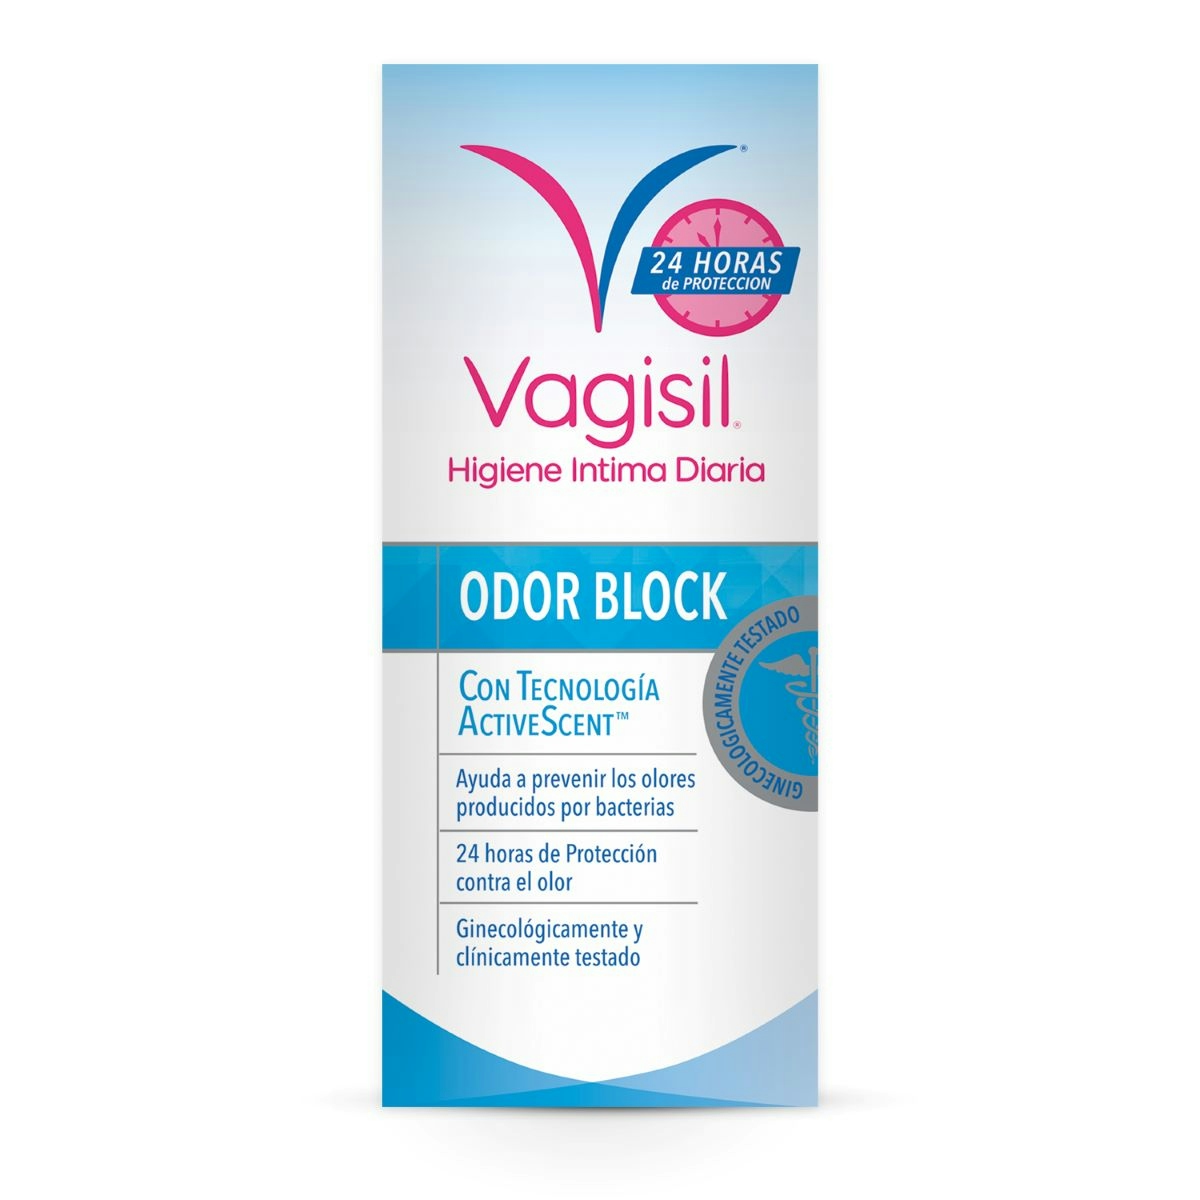 Higiene íntima VAGISIL Solución odor block bote 250 ml